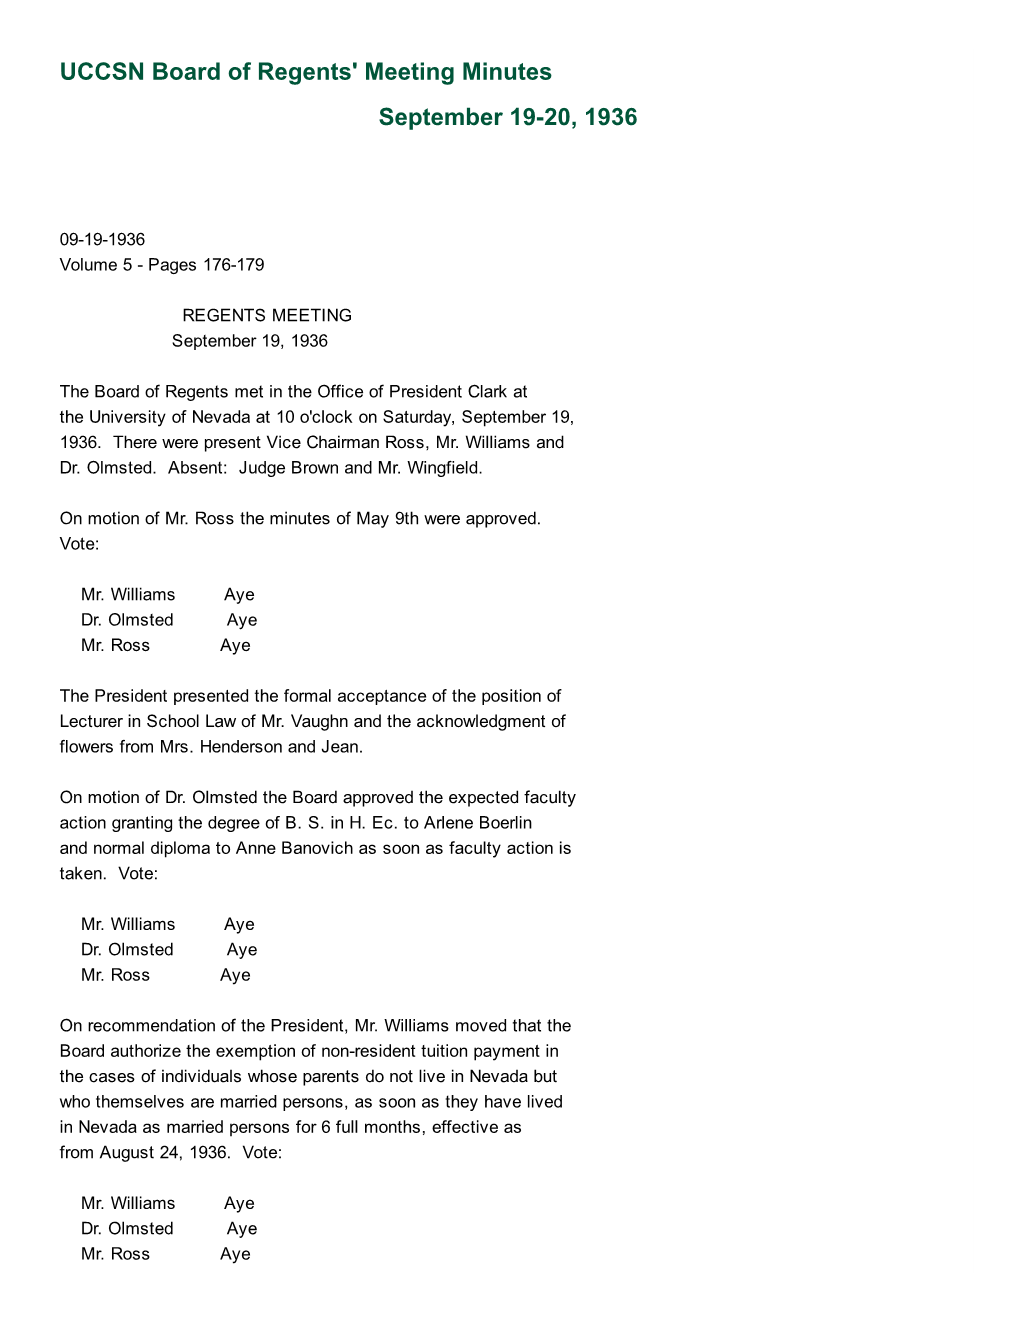 UCCSN Board of Regents' Meeting Minutes September 1920, 1936